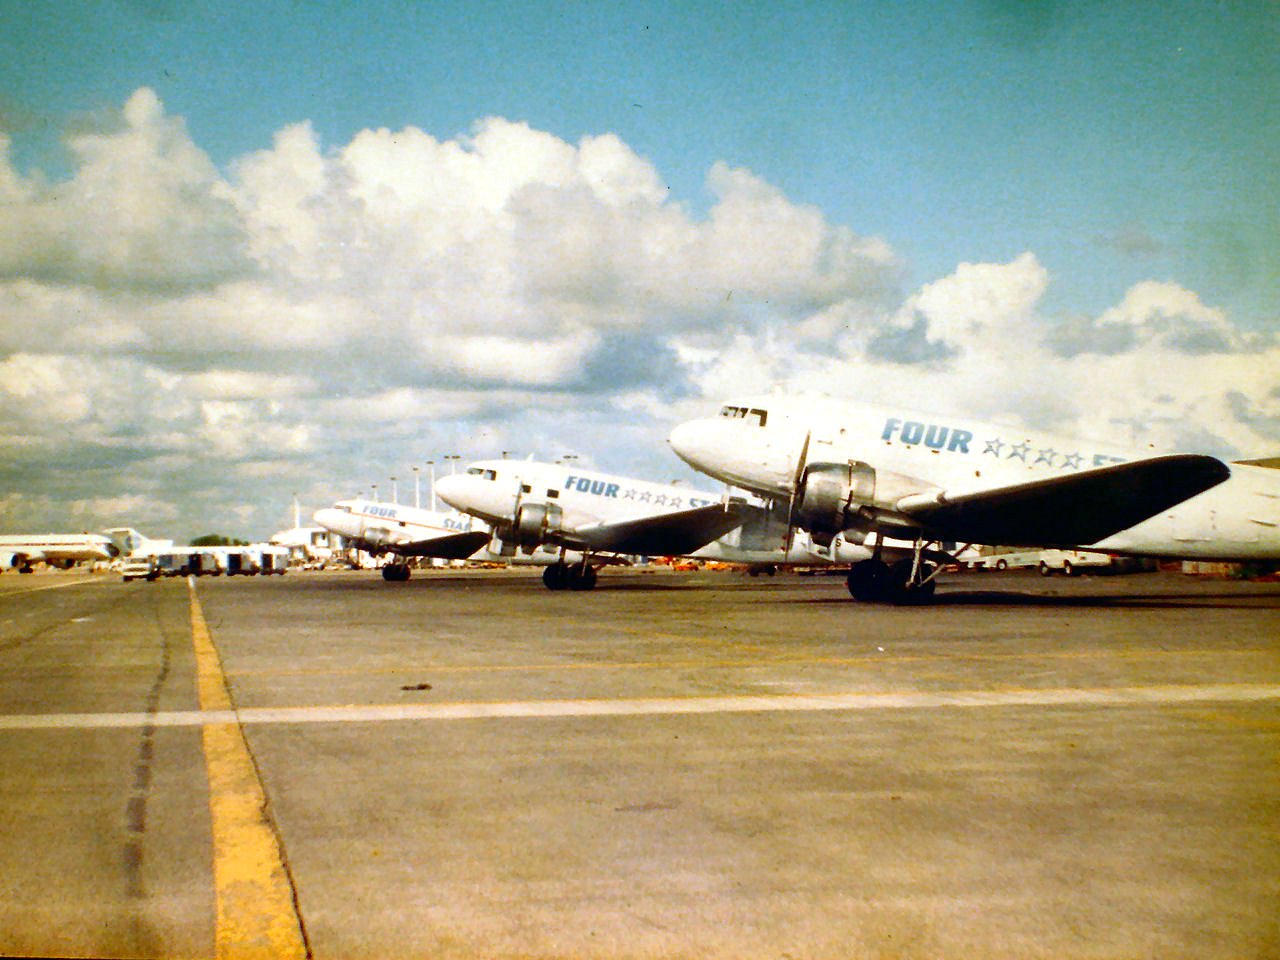 File:Four Star Air Cargo (4713080340).jpg - Wikimedia Commons